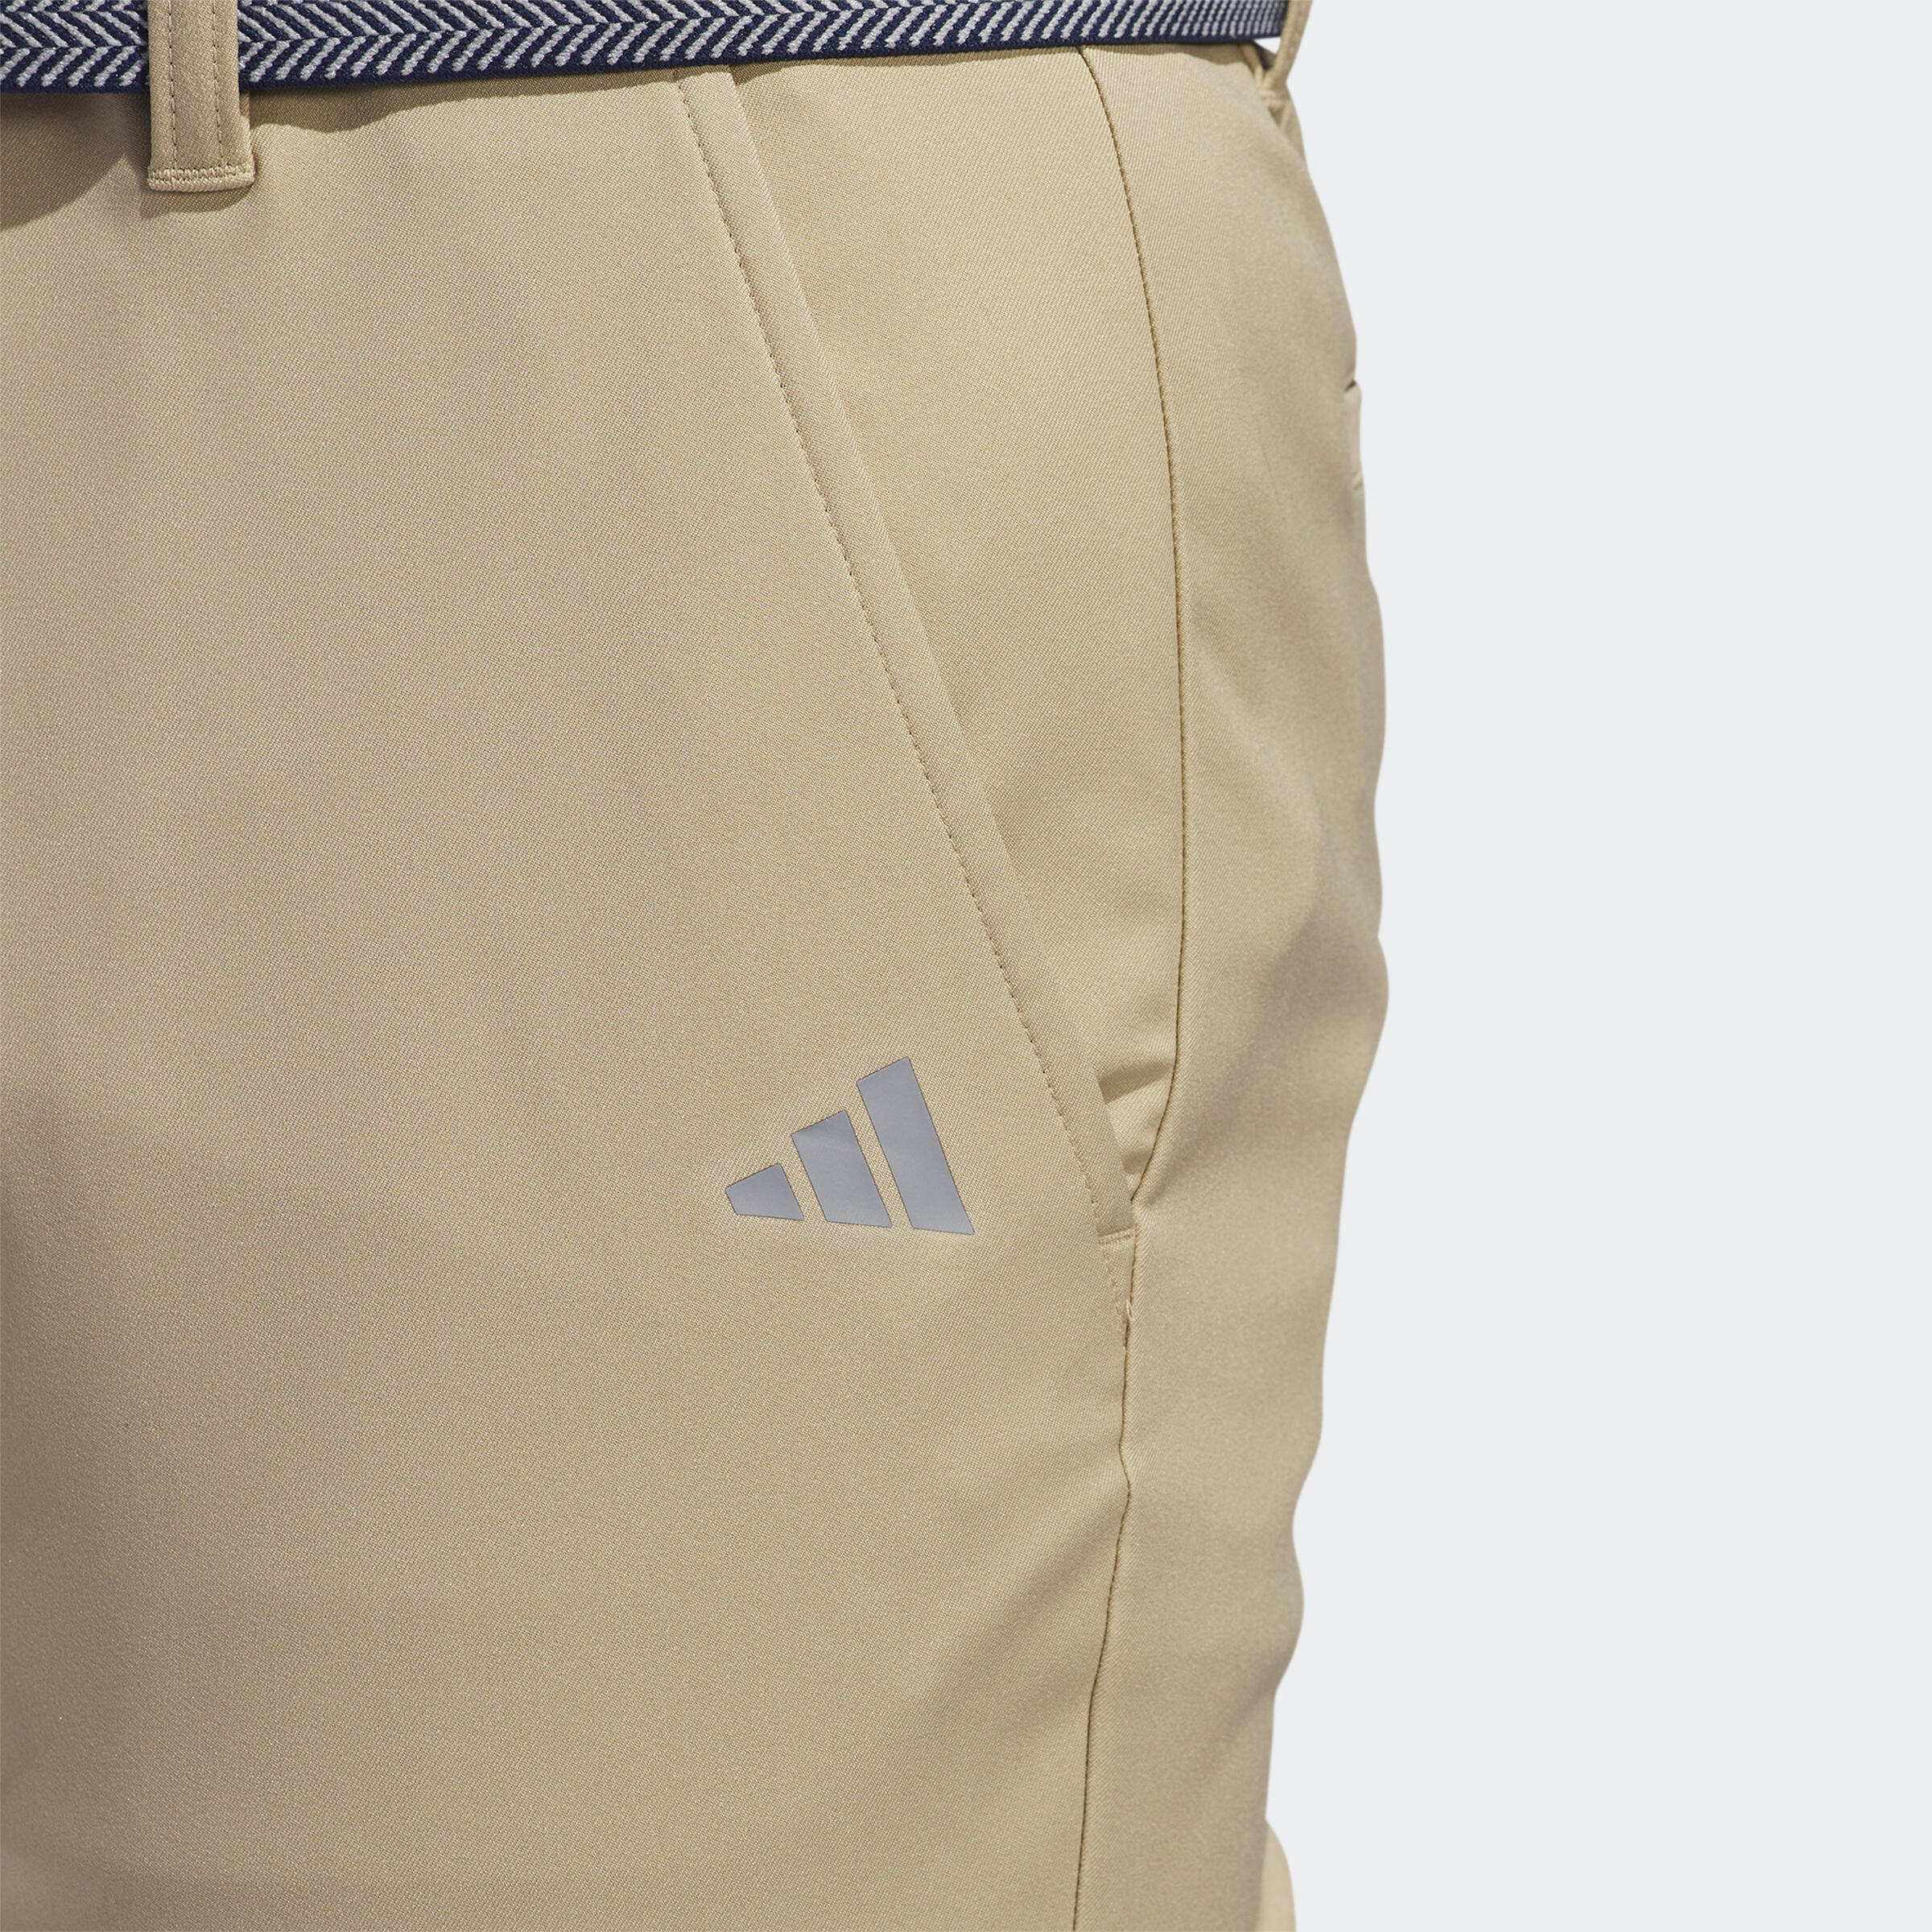 Men's golf trousers - Adidas beige 4/4